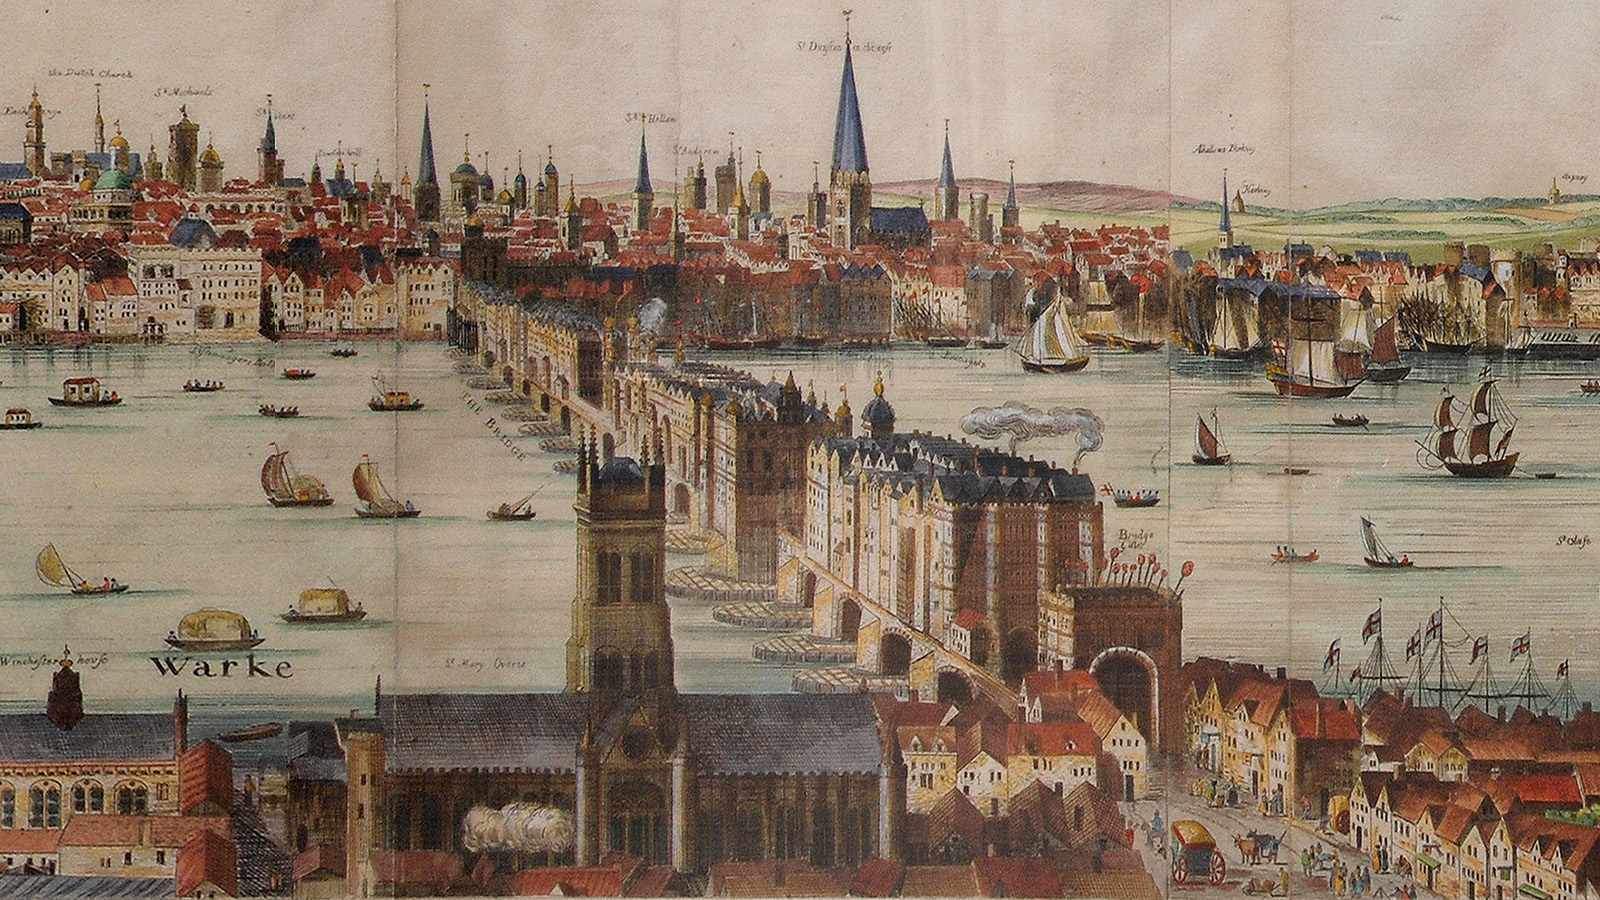 A century of being around. Лондон 17 века река Темза. Англия в 16 веке Лондон. Лондонский мост 16 век. Лондон 16-17 век.